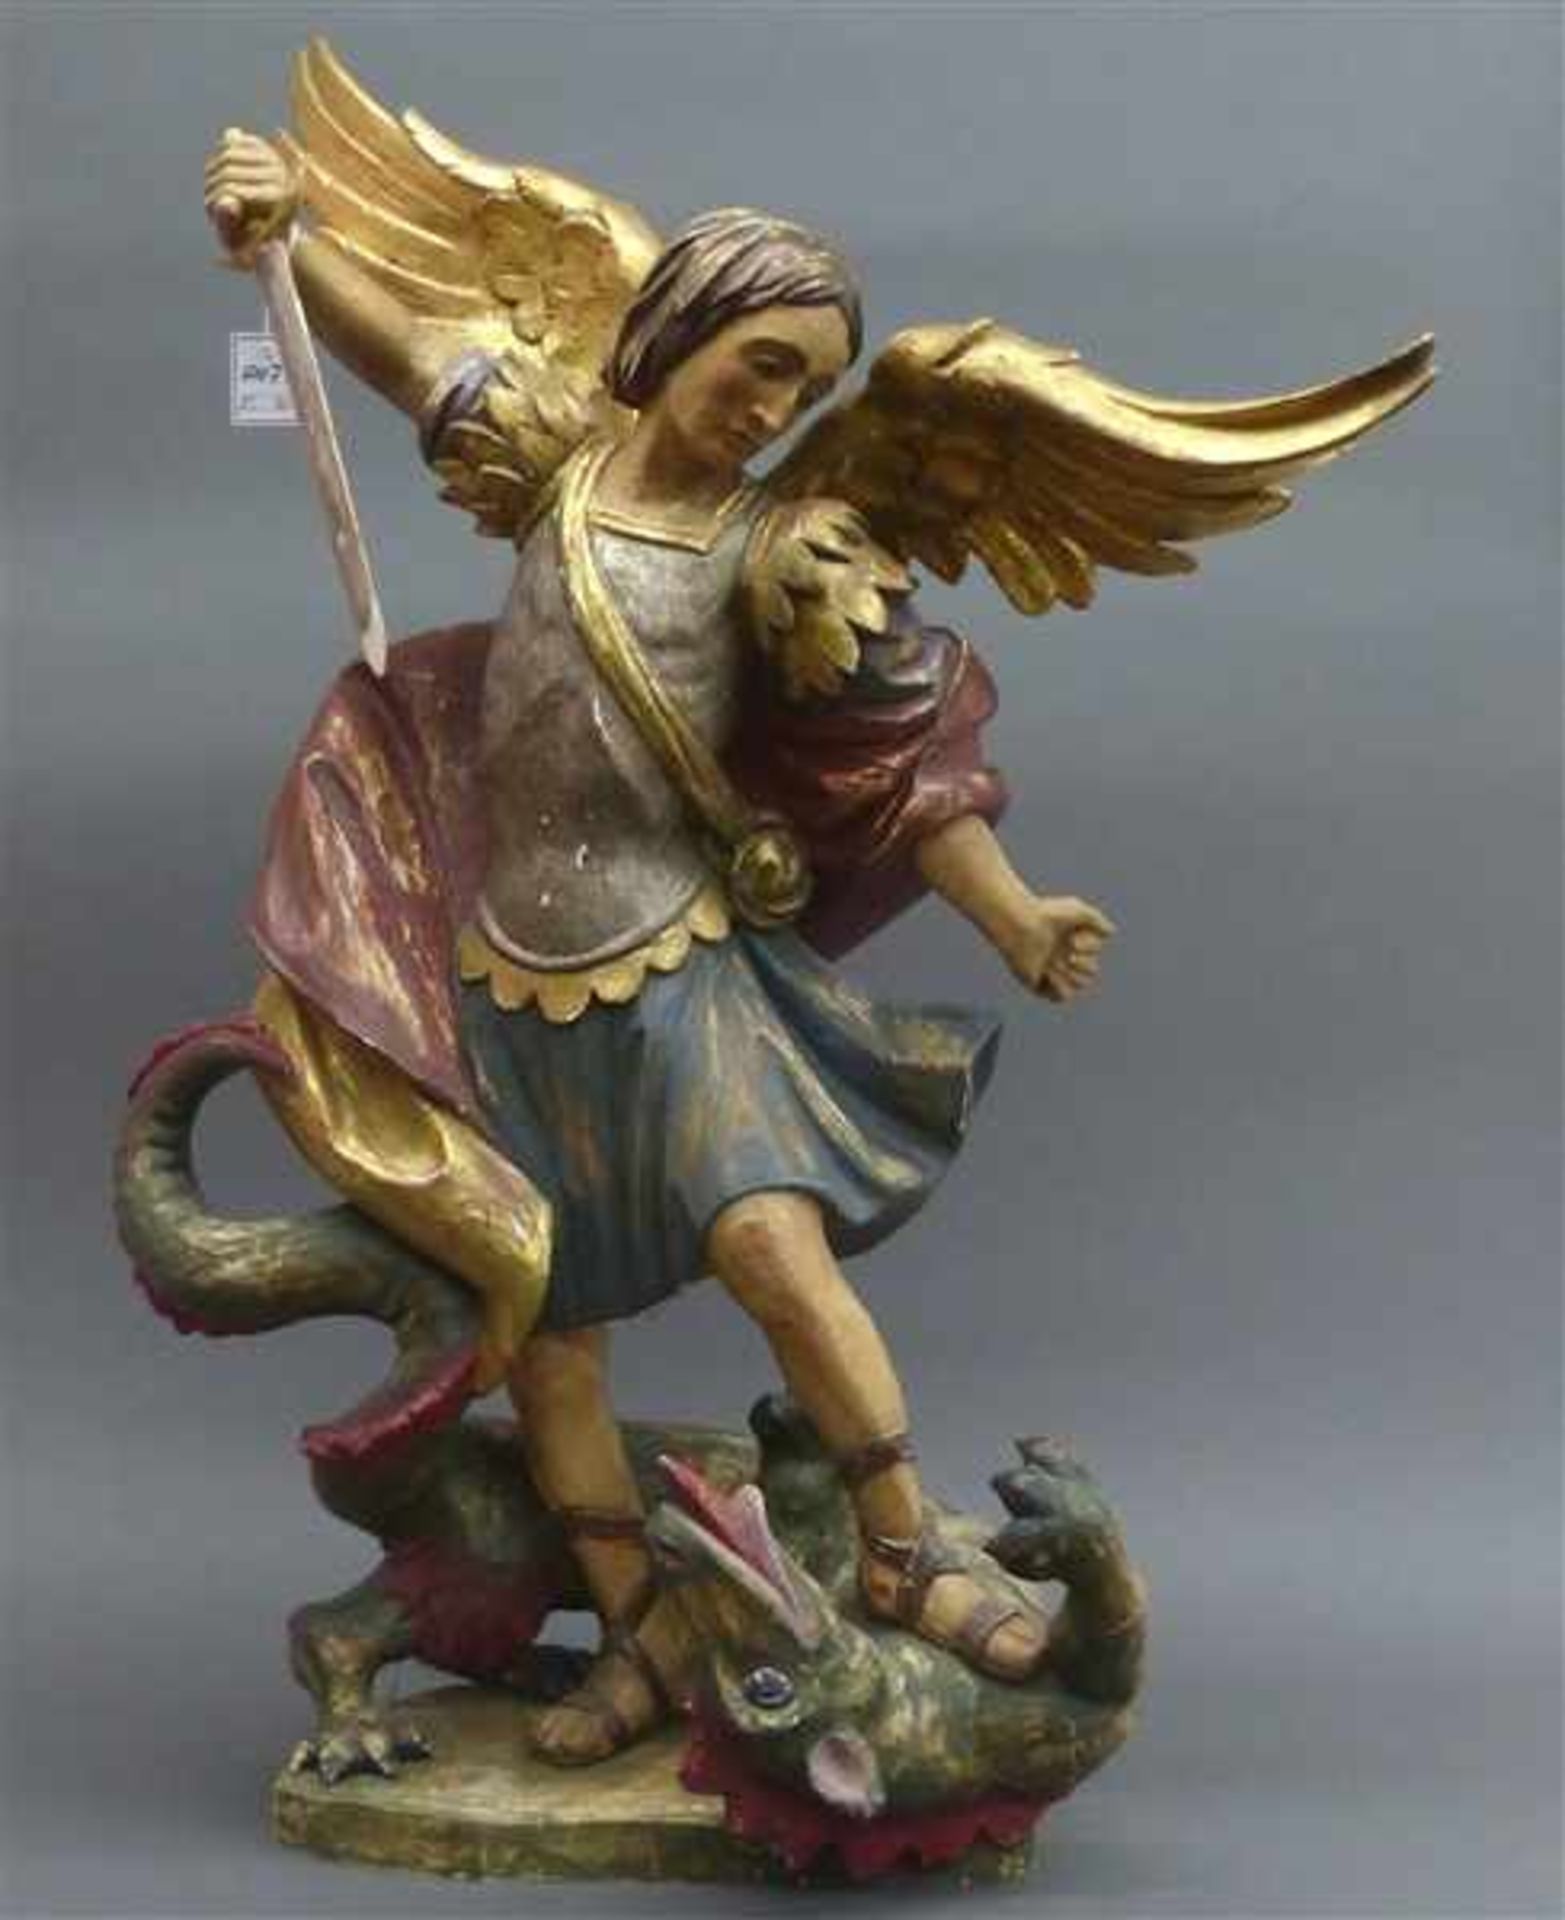 HeiligenskulpturHolz, geschnitzt, "Hl. Michael im Kampf mit dem Drachen", gefasst, teilvergoldet,